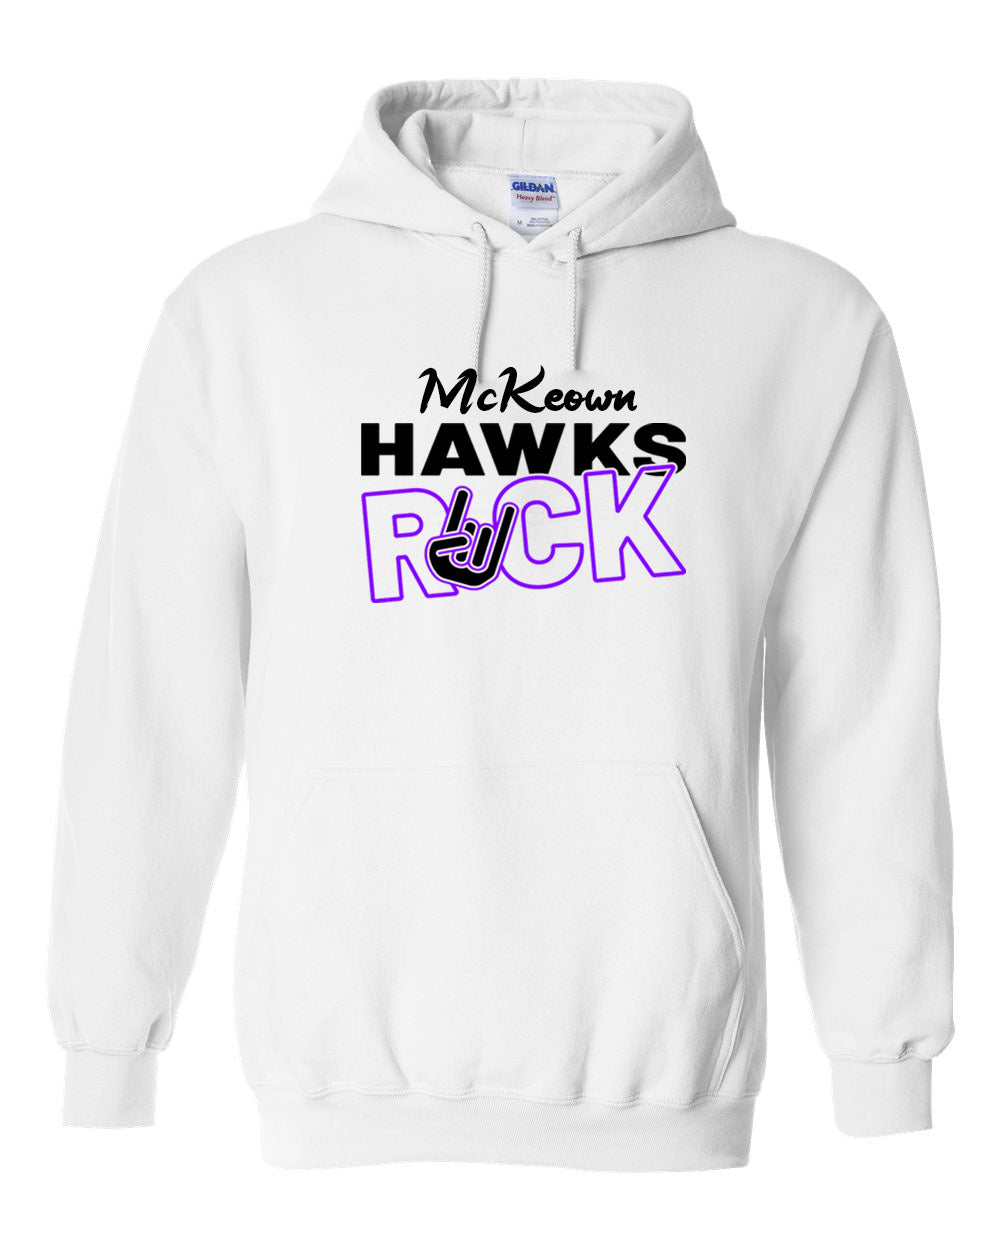 McKeown Hawks Rock Hooded Sweatshirt